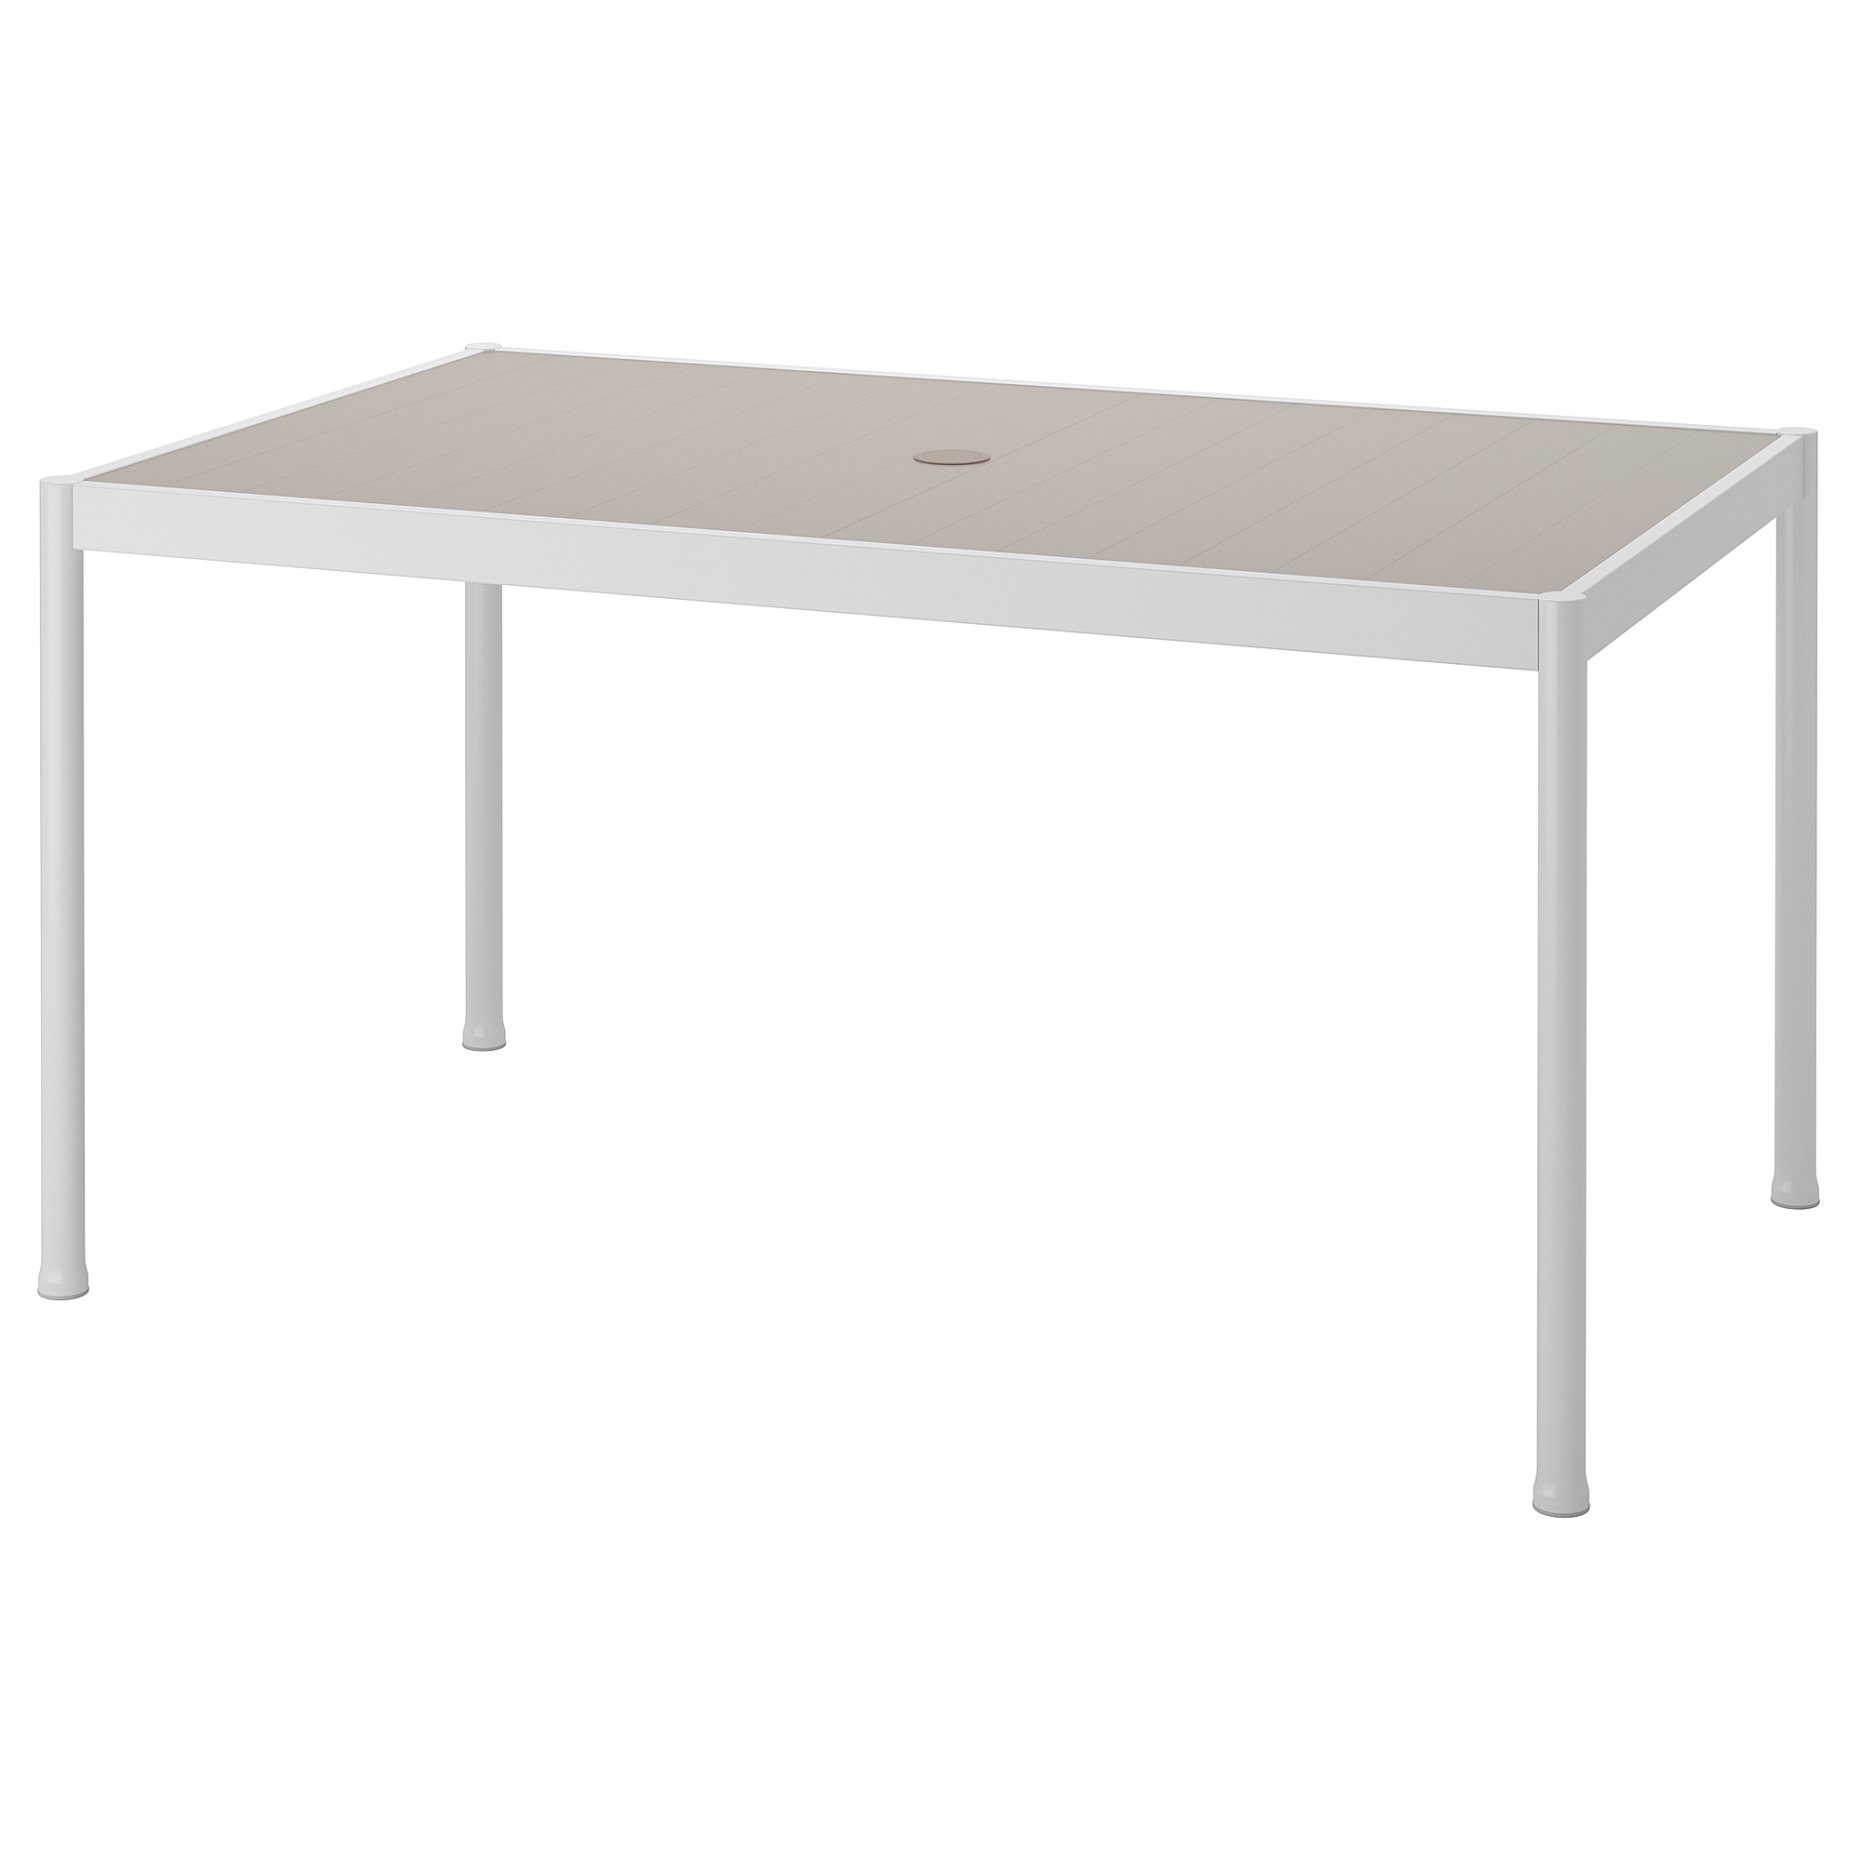 SEGERÖN, τραπέζι/εξωτερικού χώρου, 91x147 cm, 905.108.13